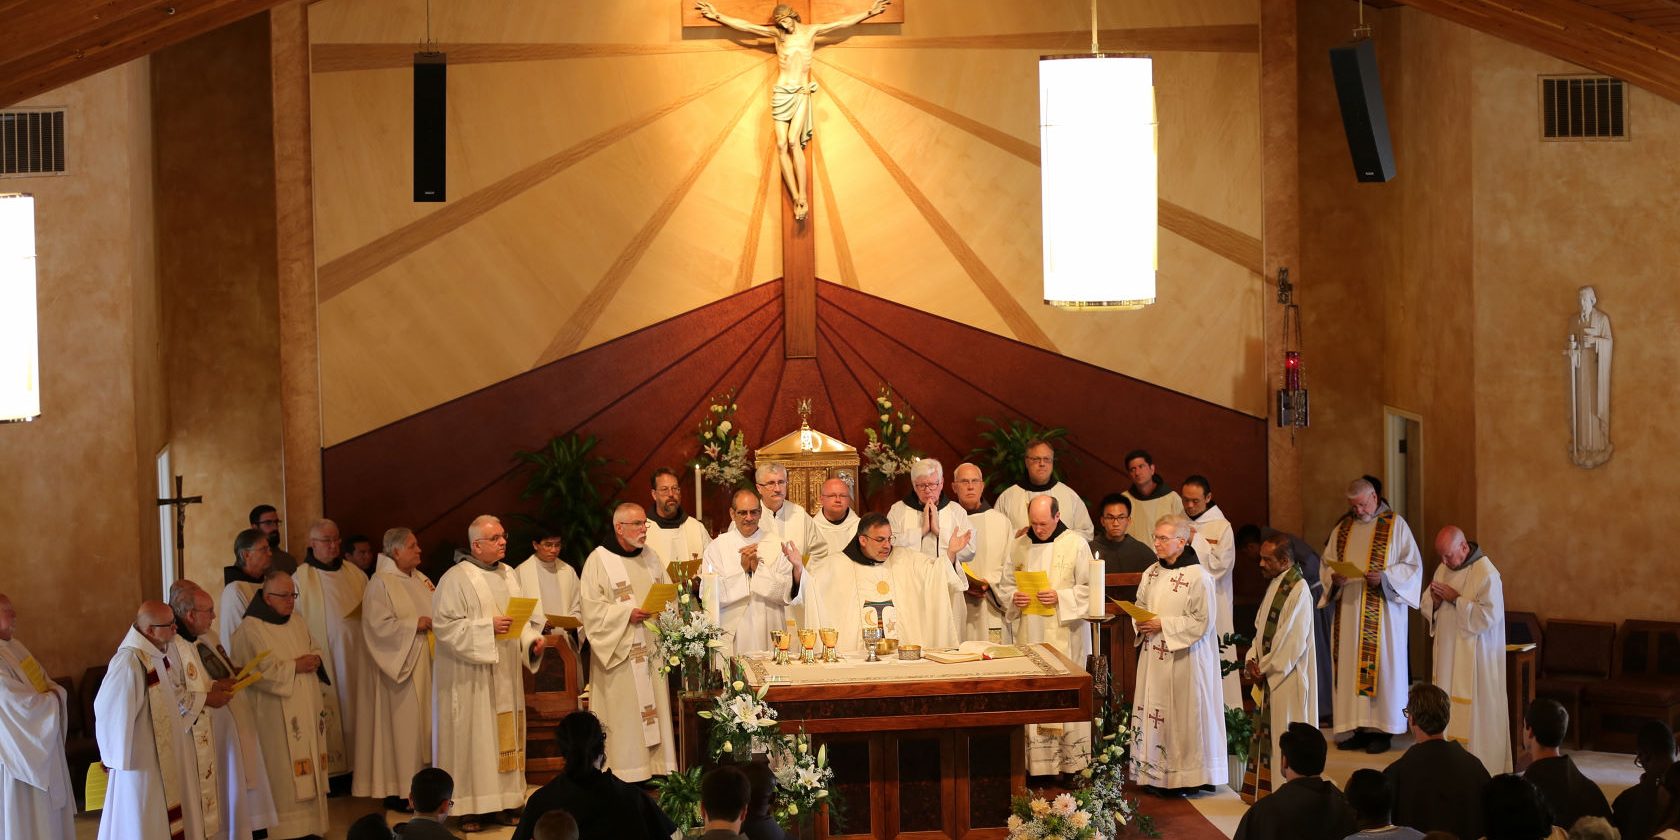 The Conventual Mass